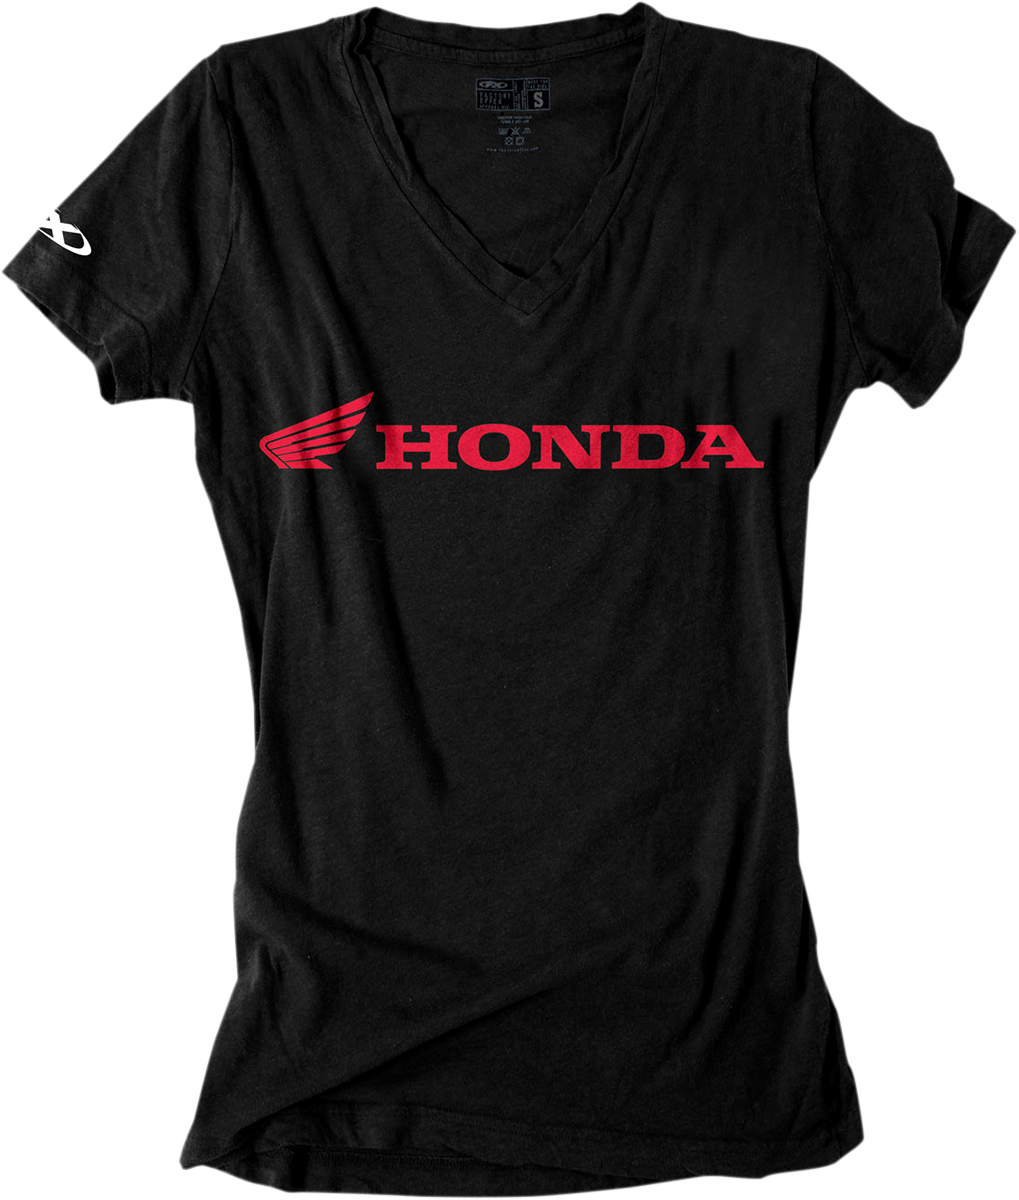 FACTORY EFFEX Women's Honda V-Neck T-Shirt - Black - Large 16-88344